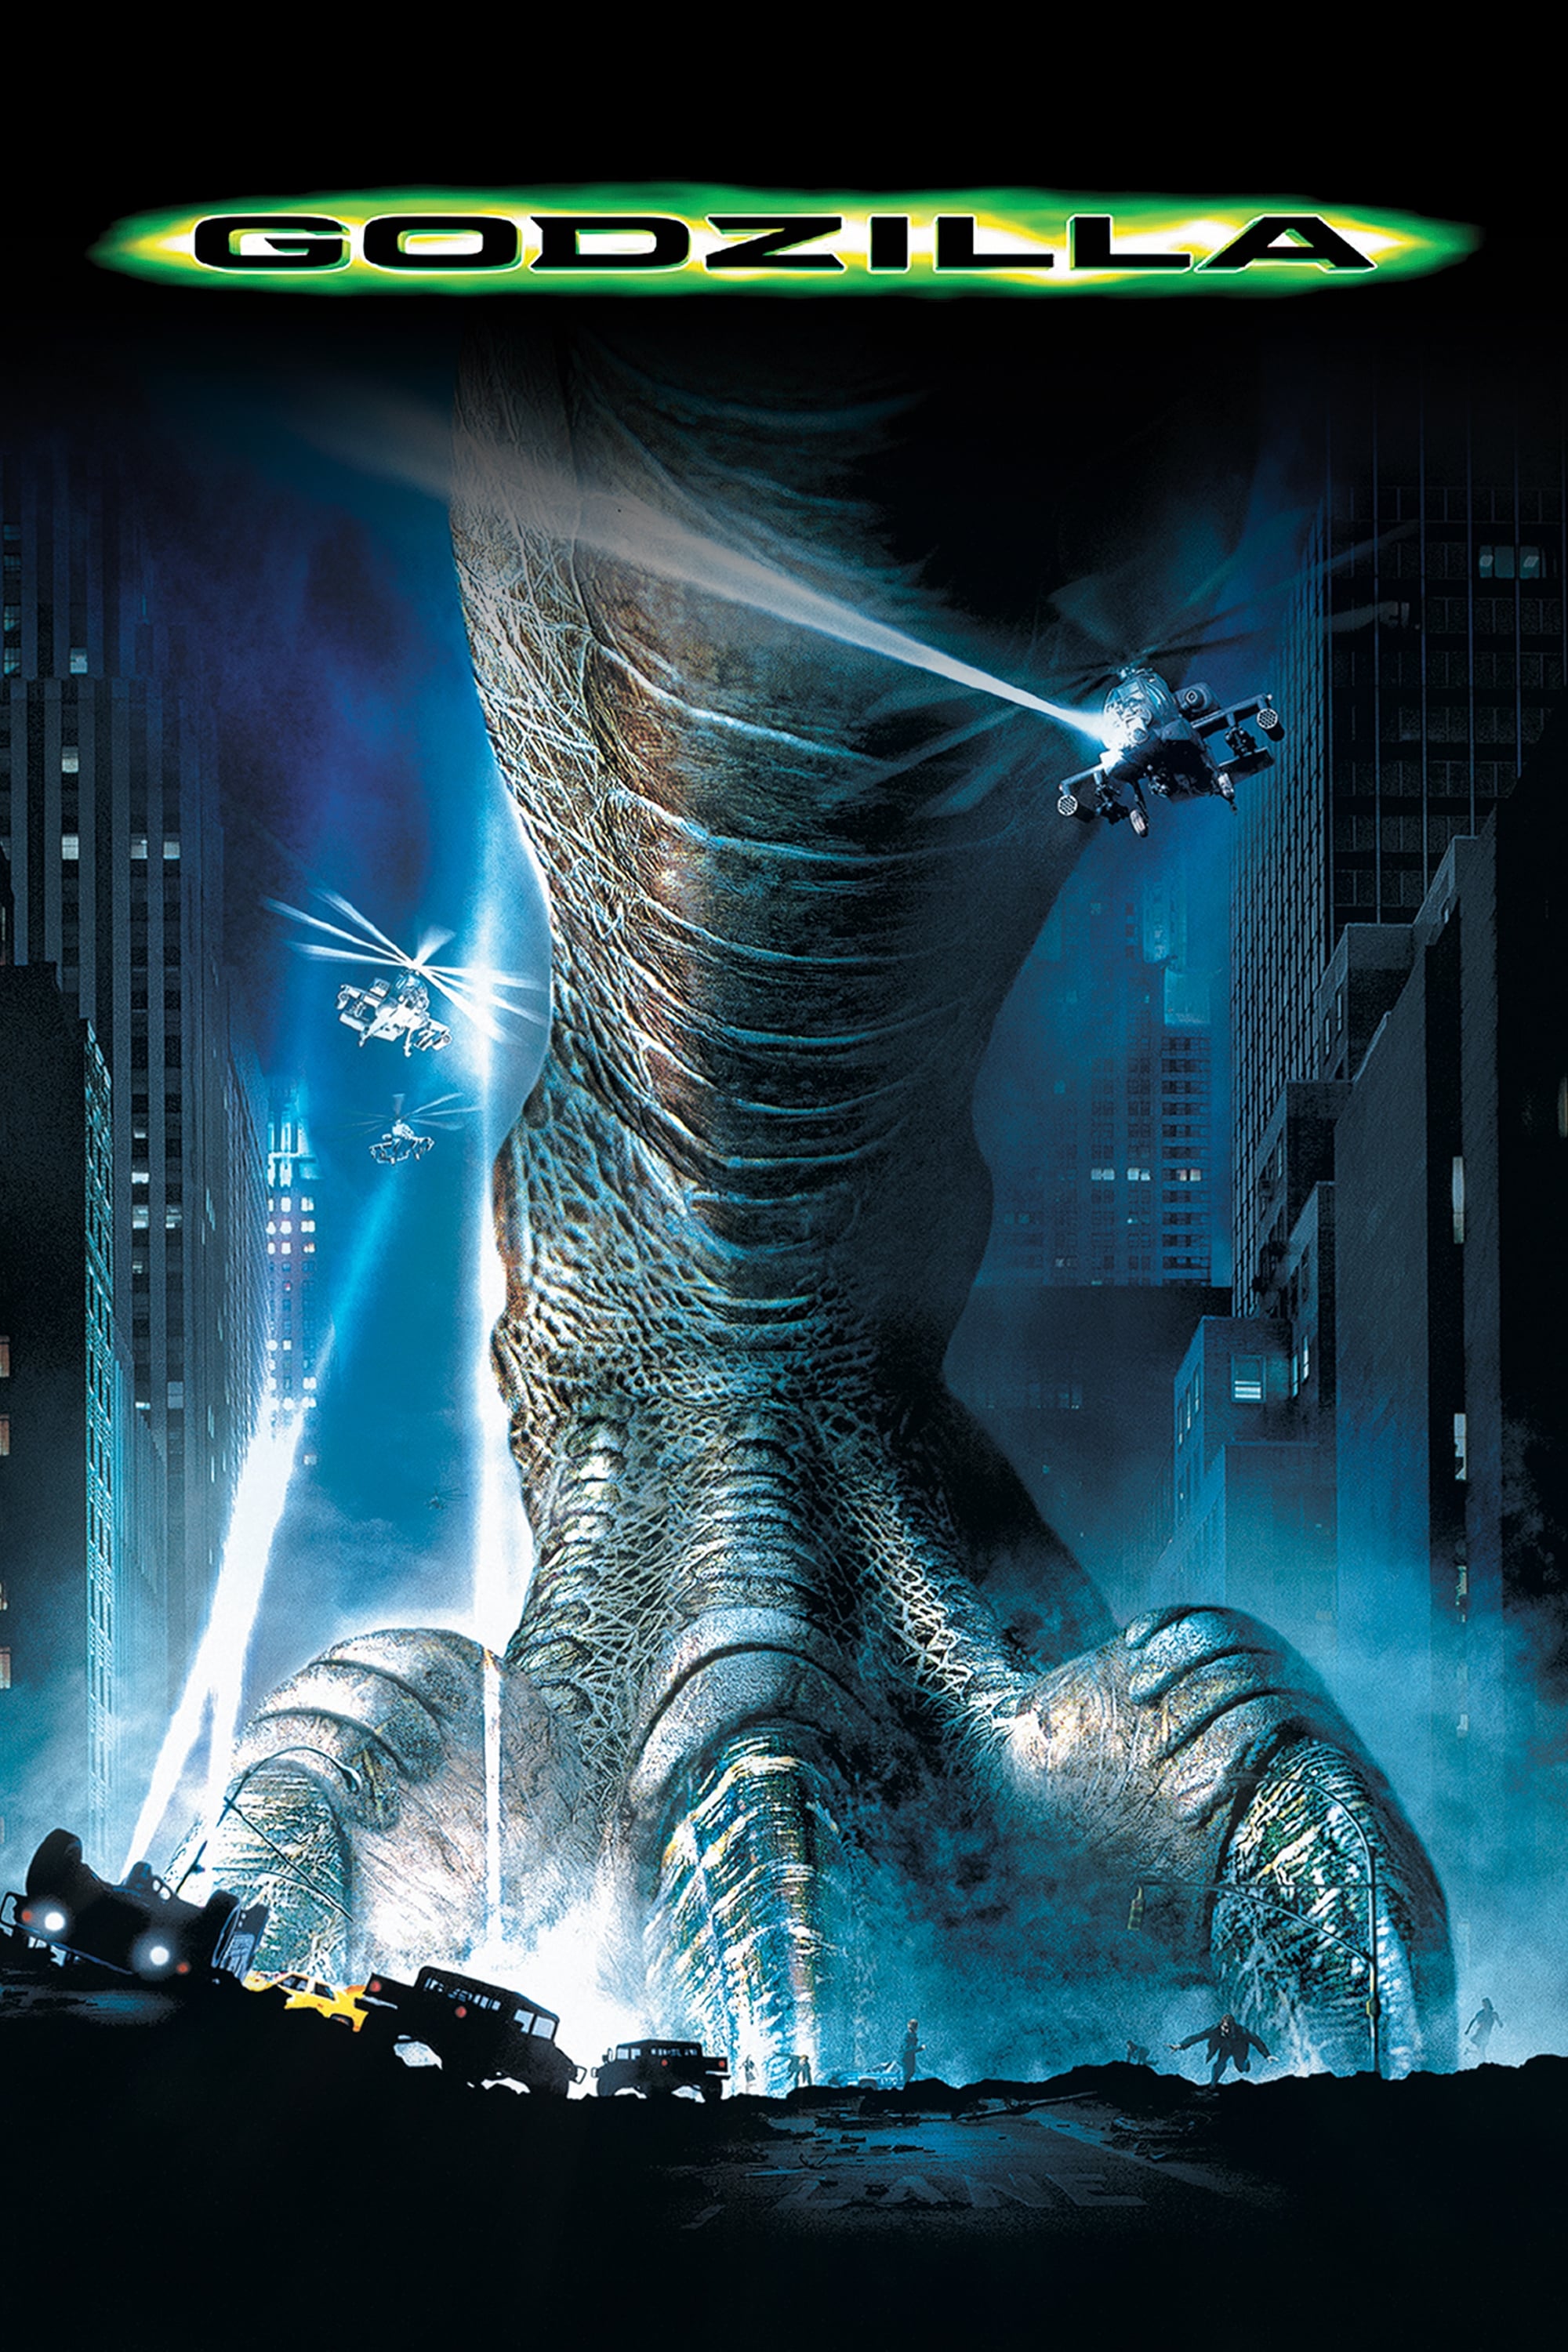 Quái Vật Godzilla (Godzilla) [1998]